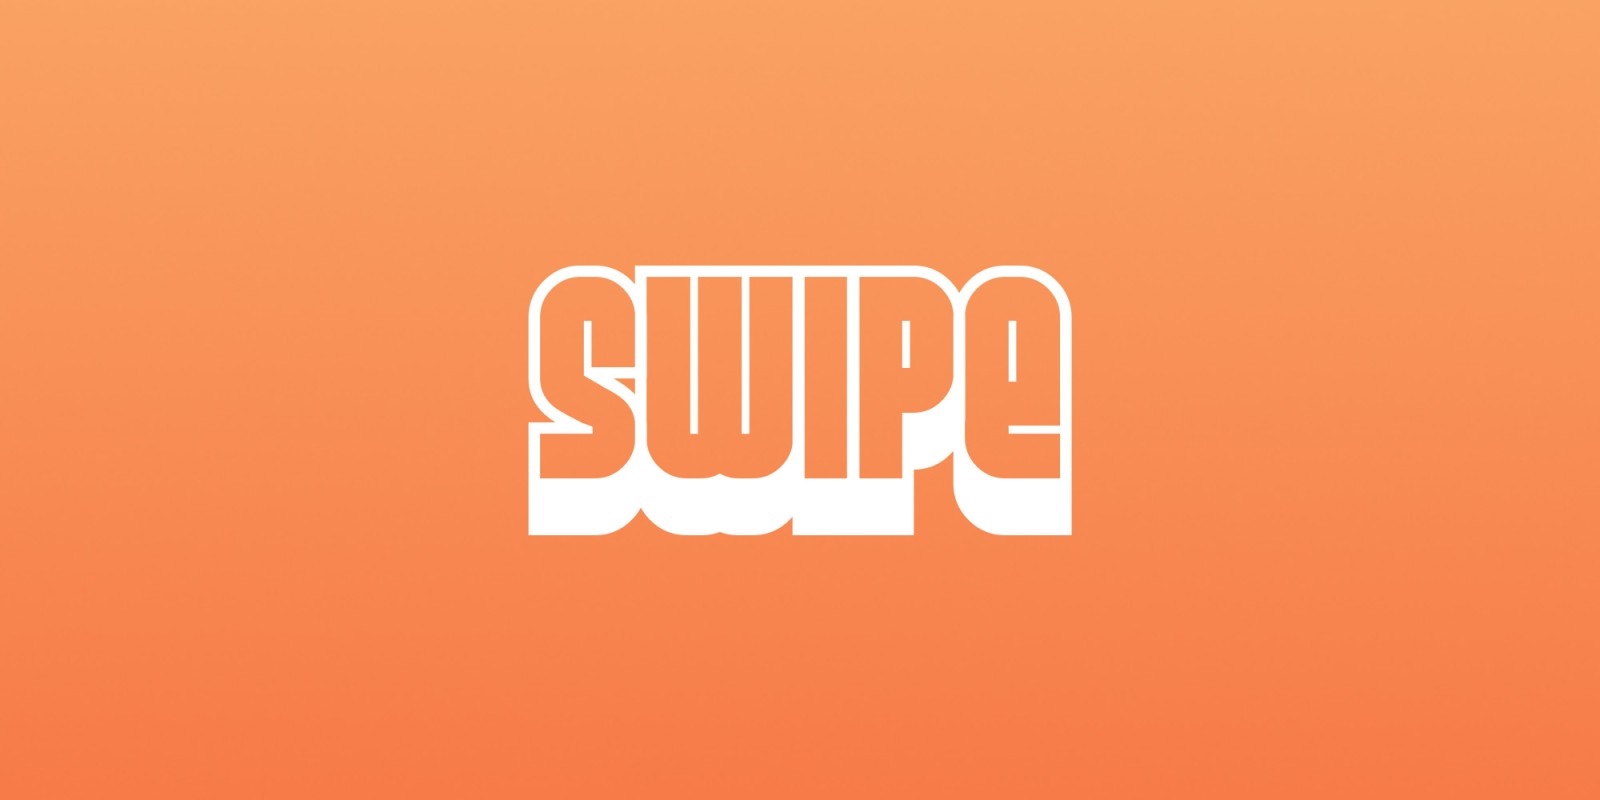 سوآپ - Swipe خبر ادغام با اوراکل Chainlink را منتشر کرد